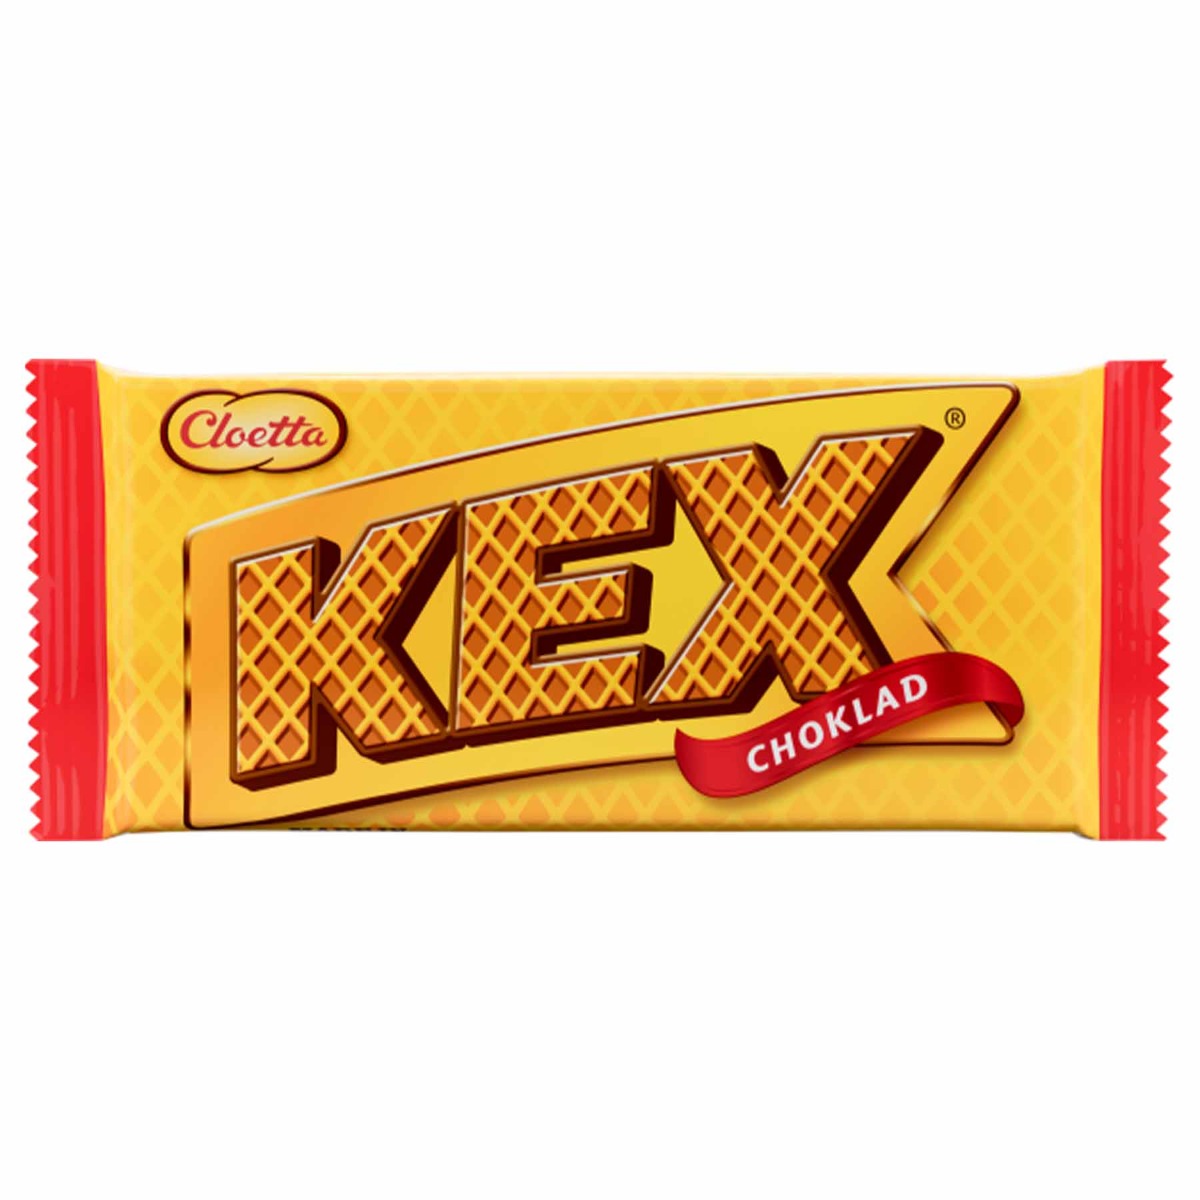 Kexchoklad original 60 g